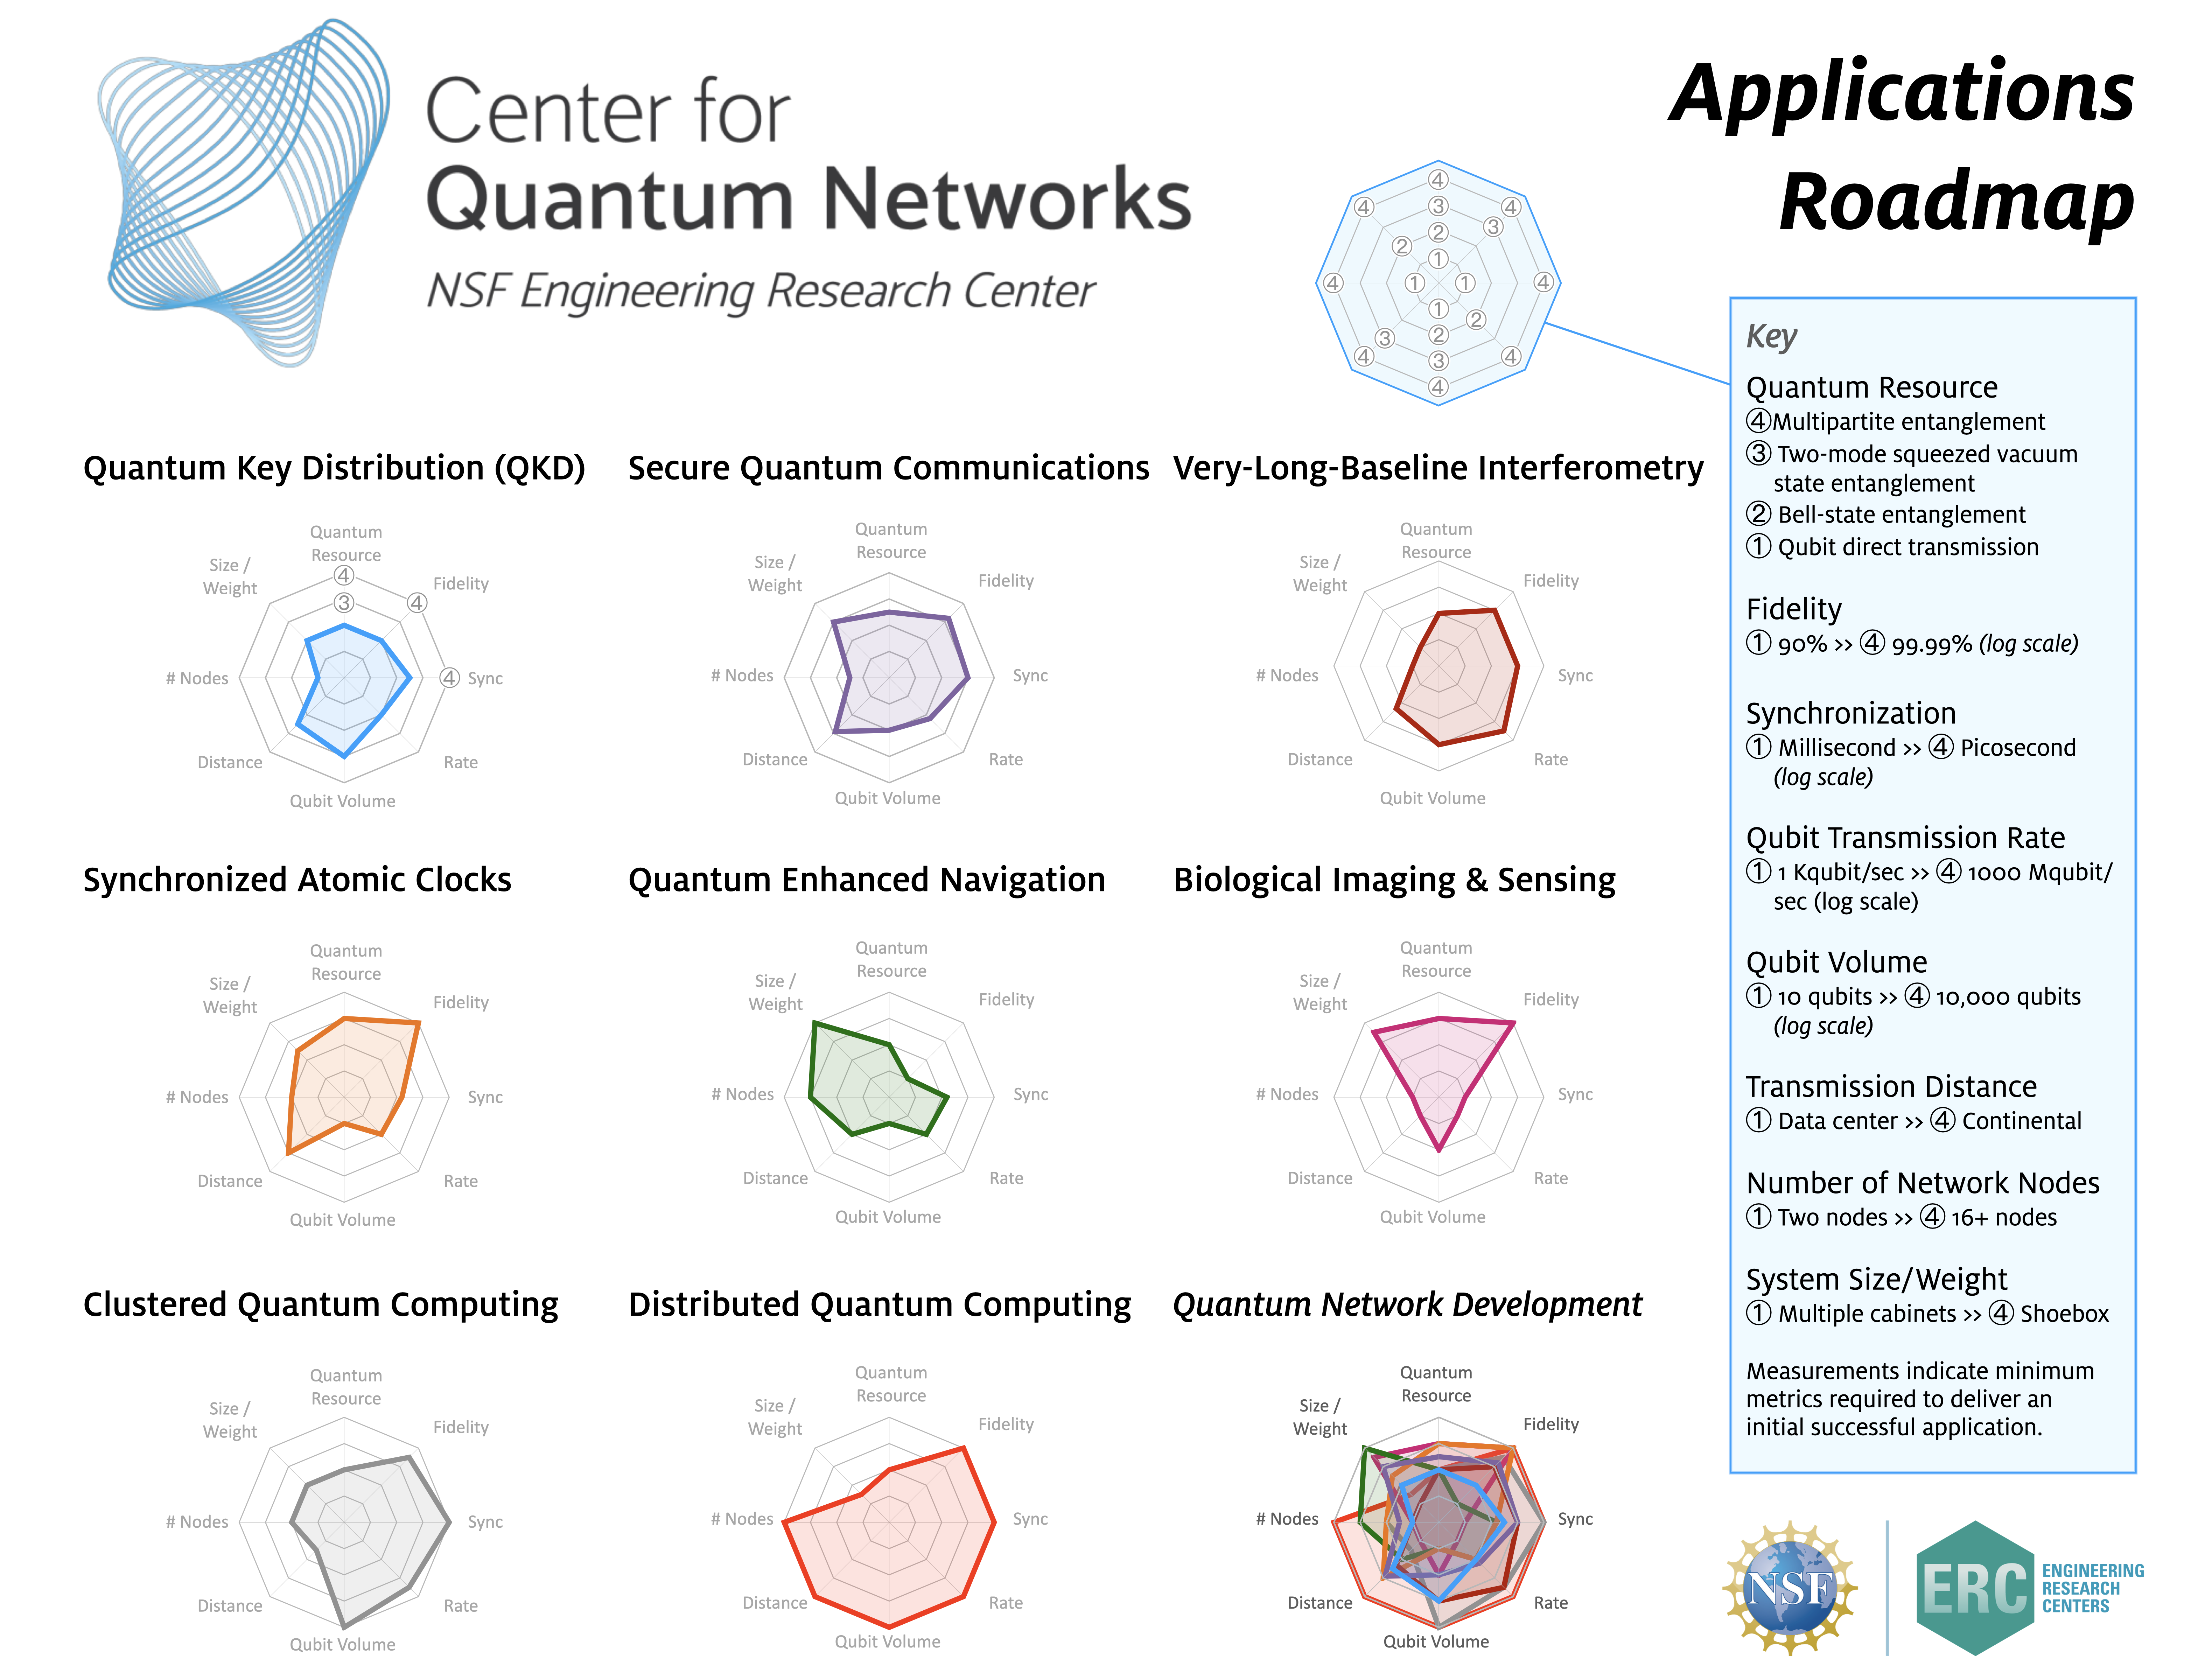 CQN applications roadmap